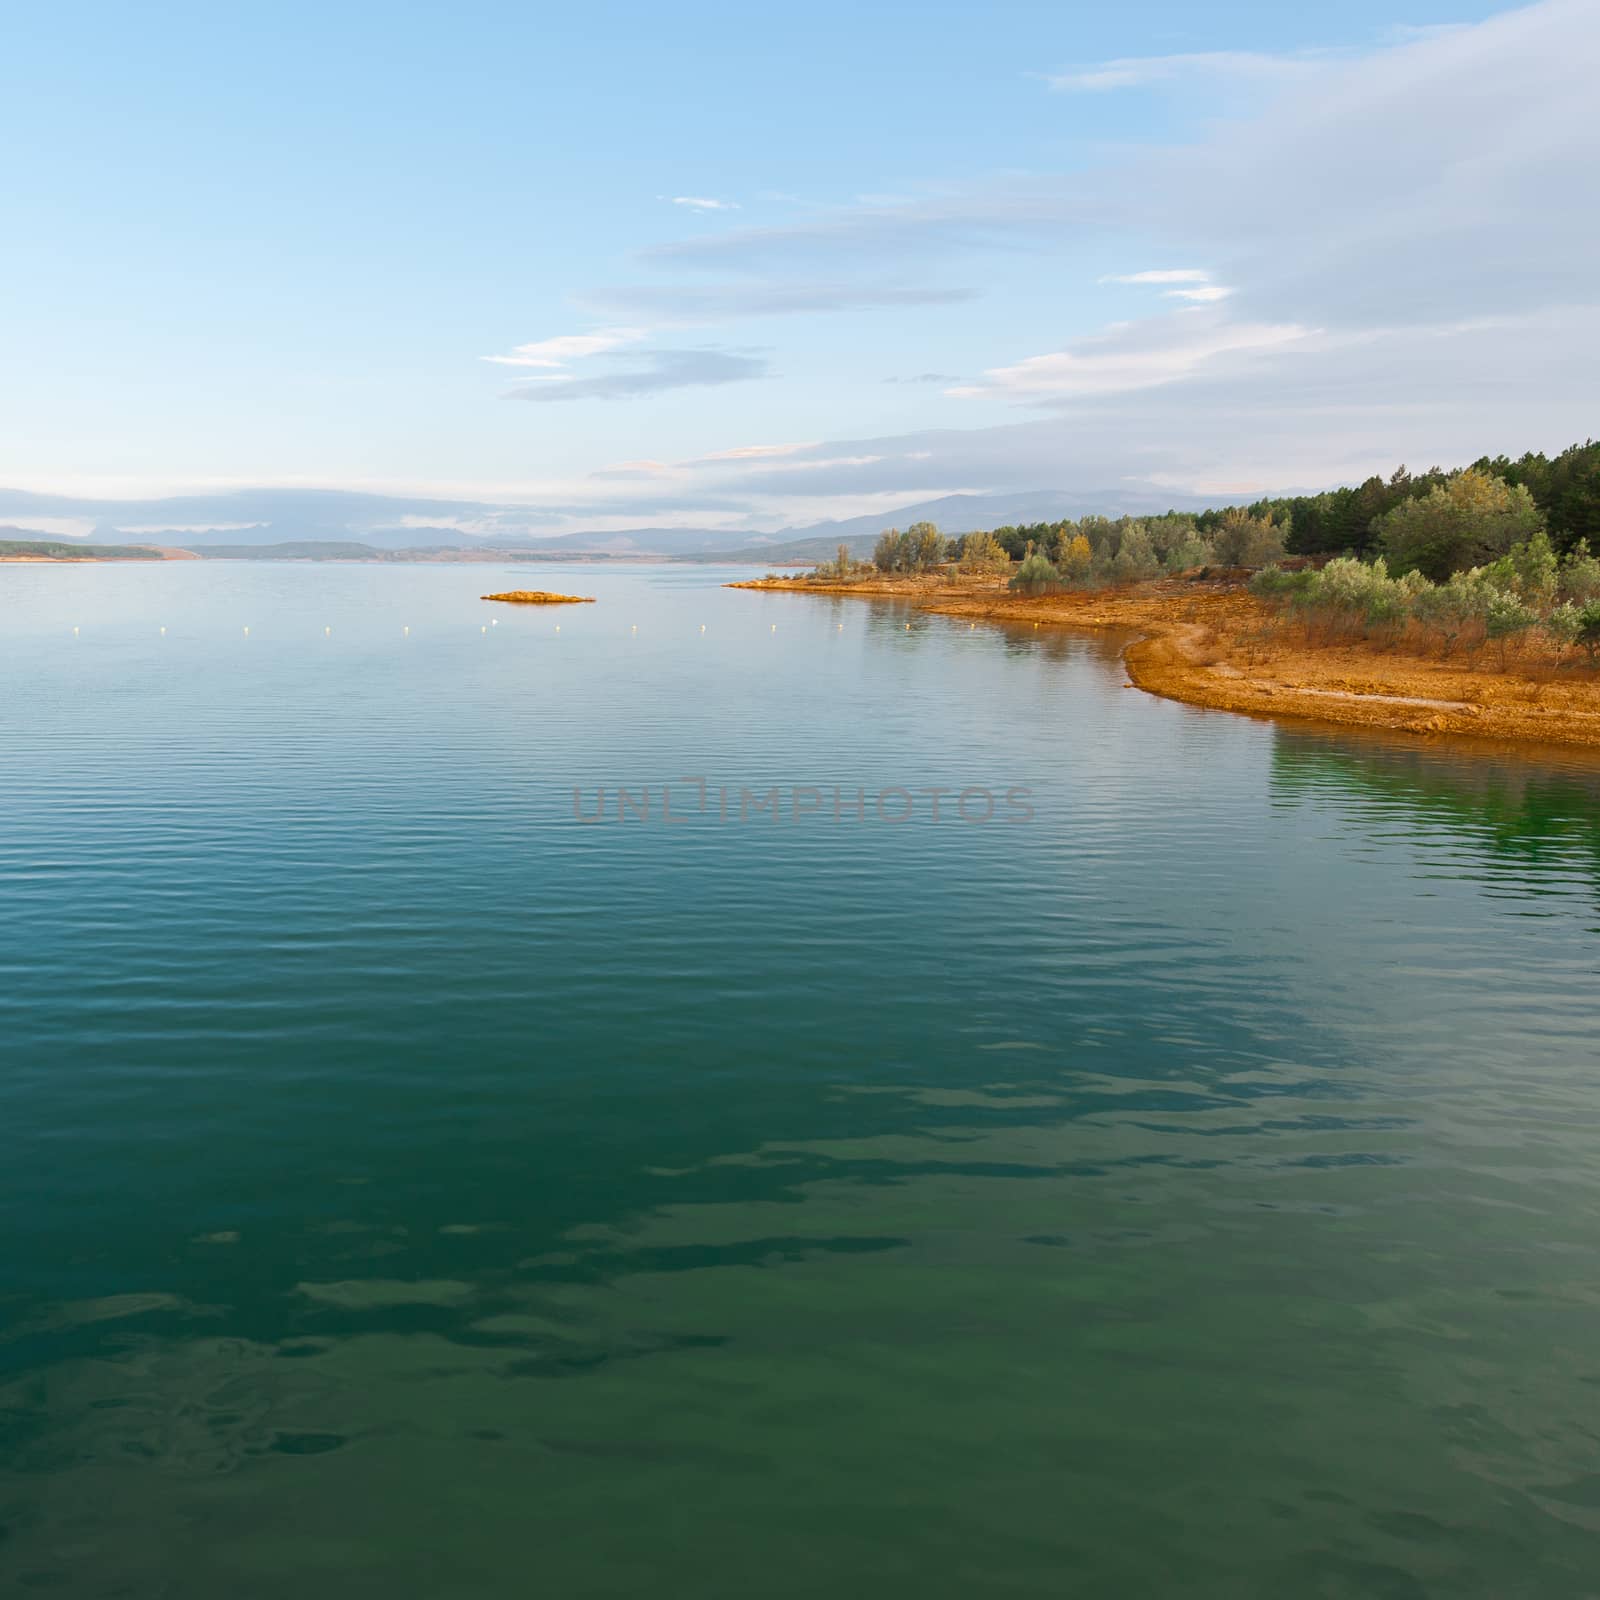  Lake in Spain by gkuna